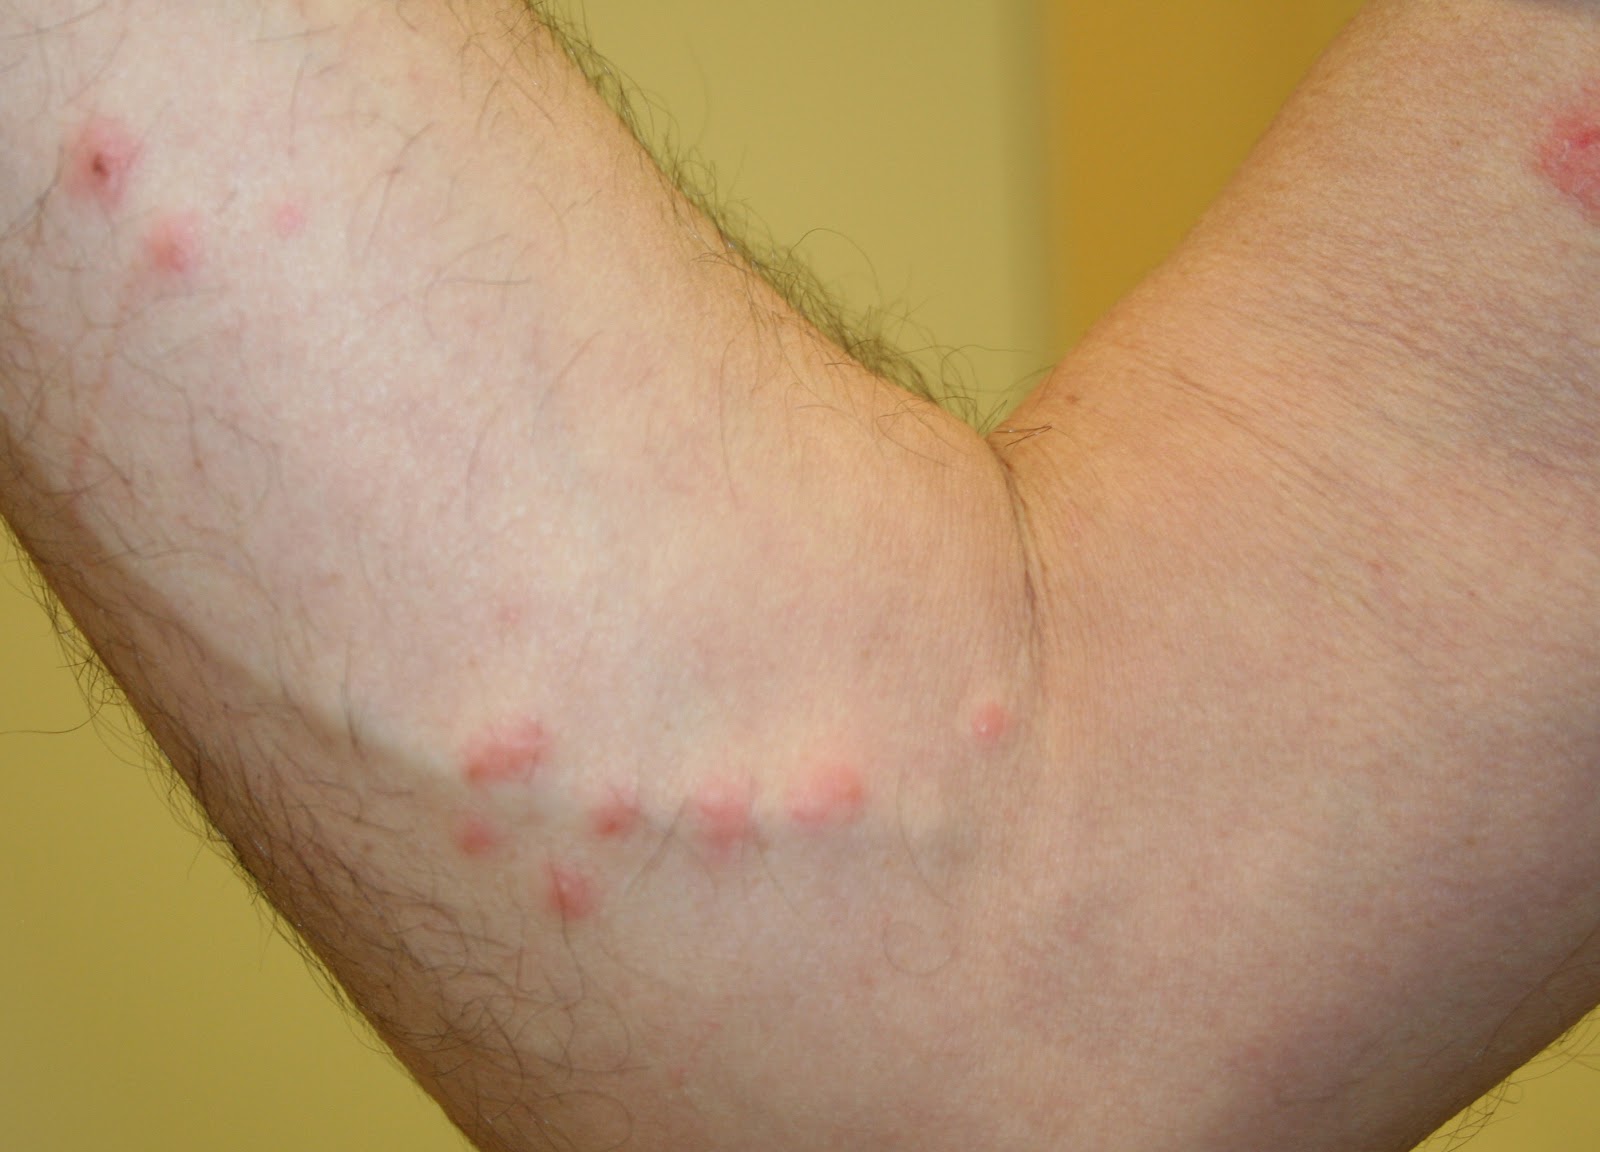 Linear bug bites - Doctor answers on HealthcareMagic